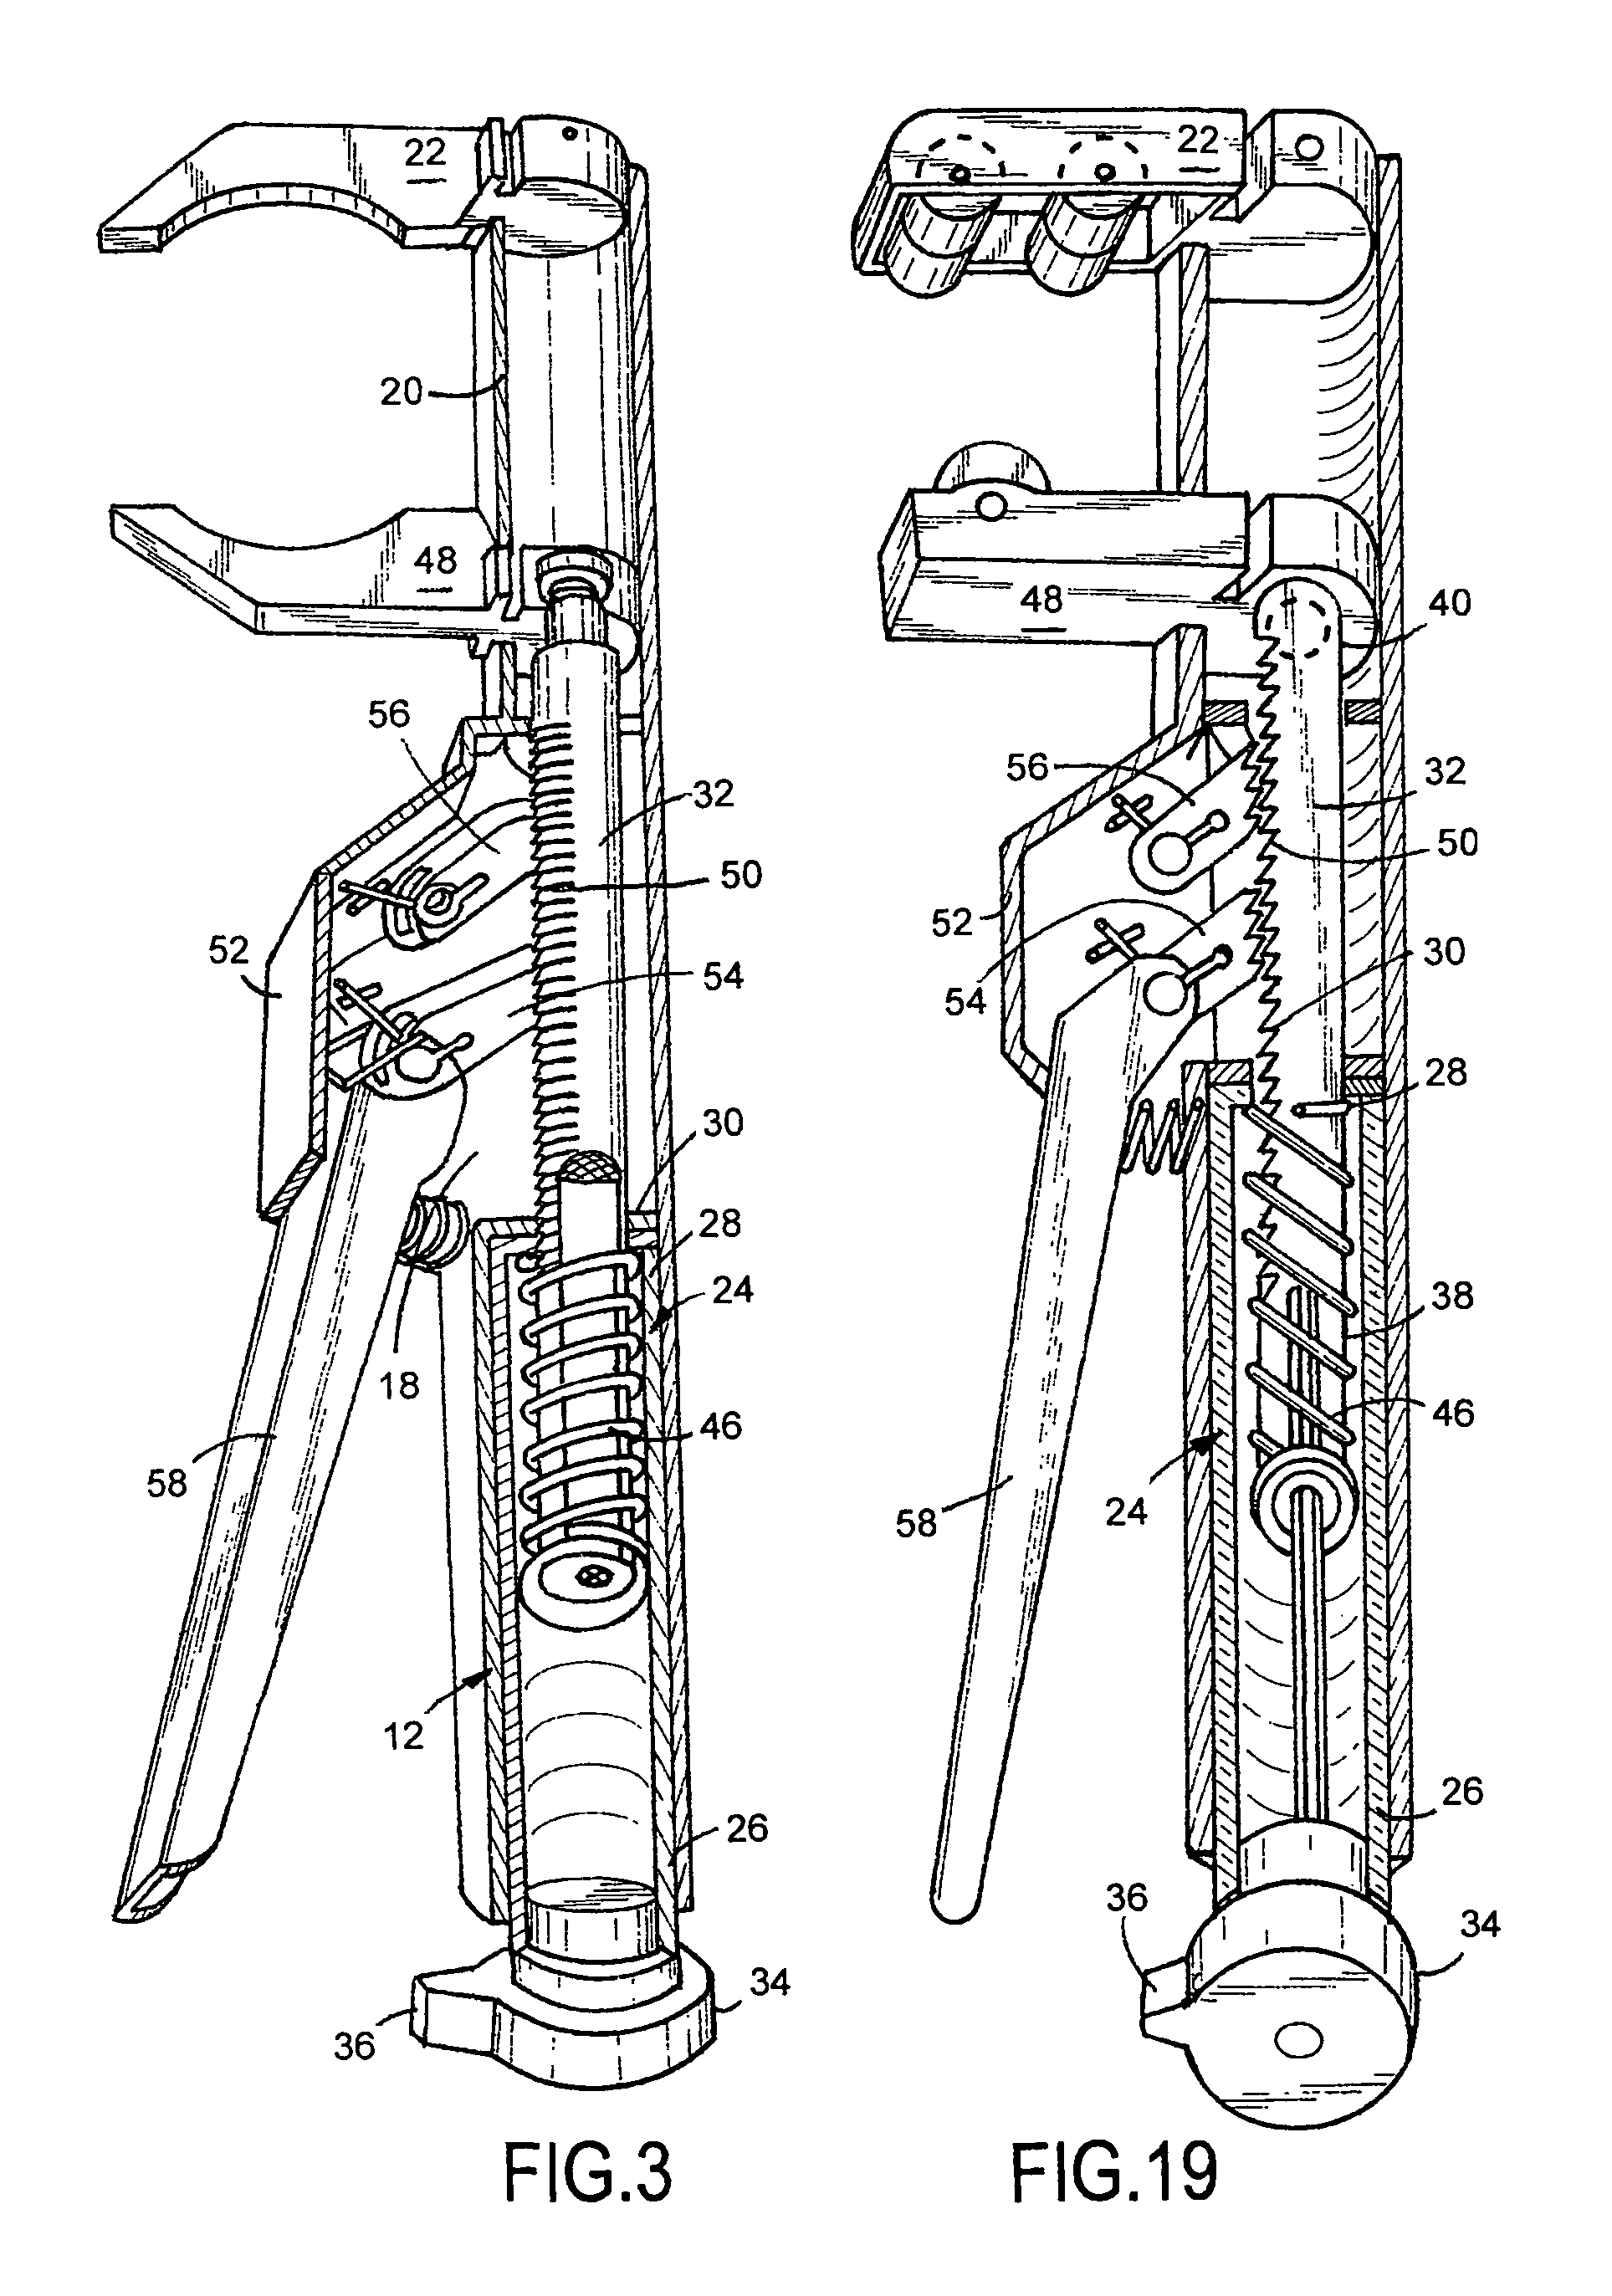 Viper crescent wrench device